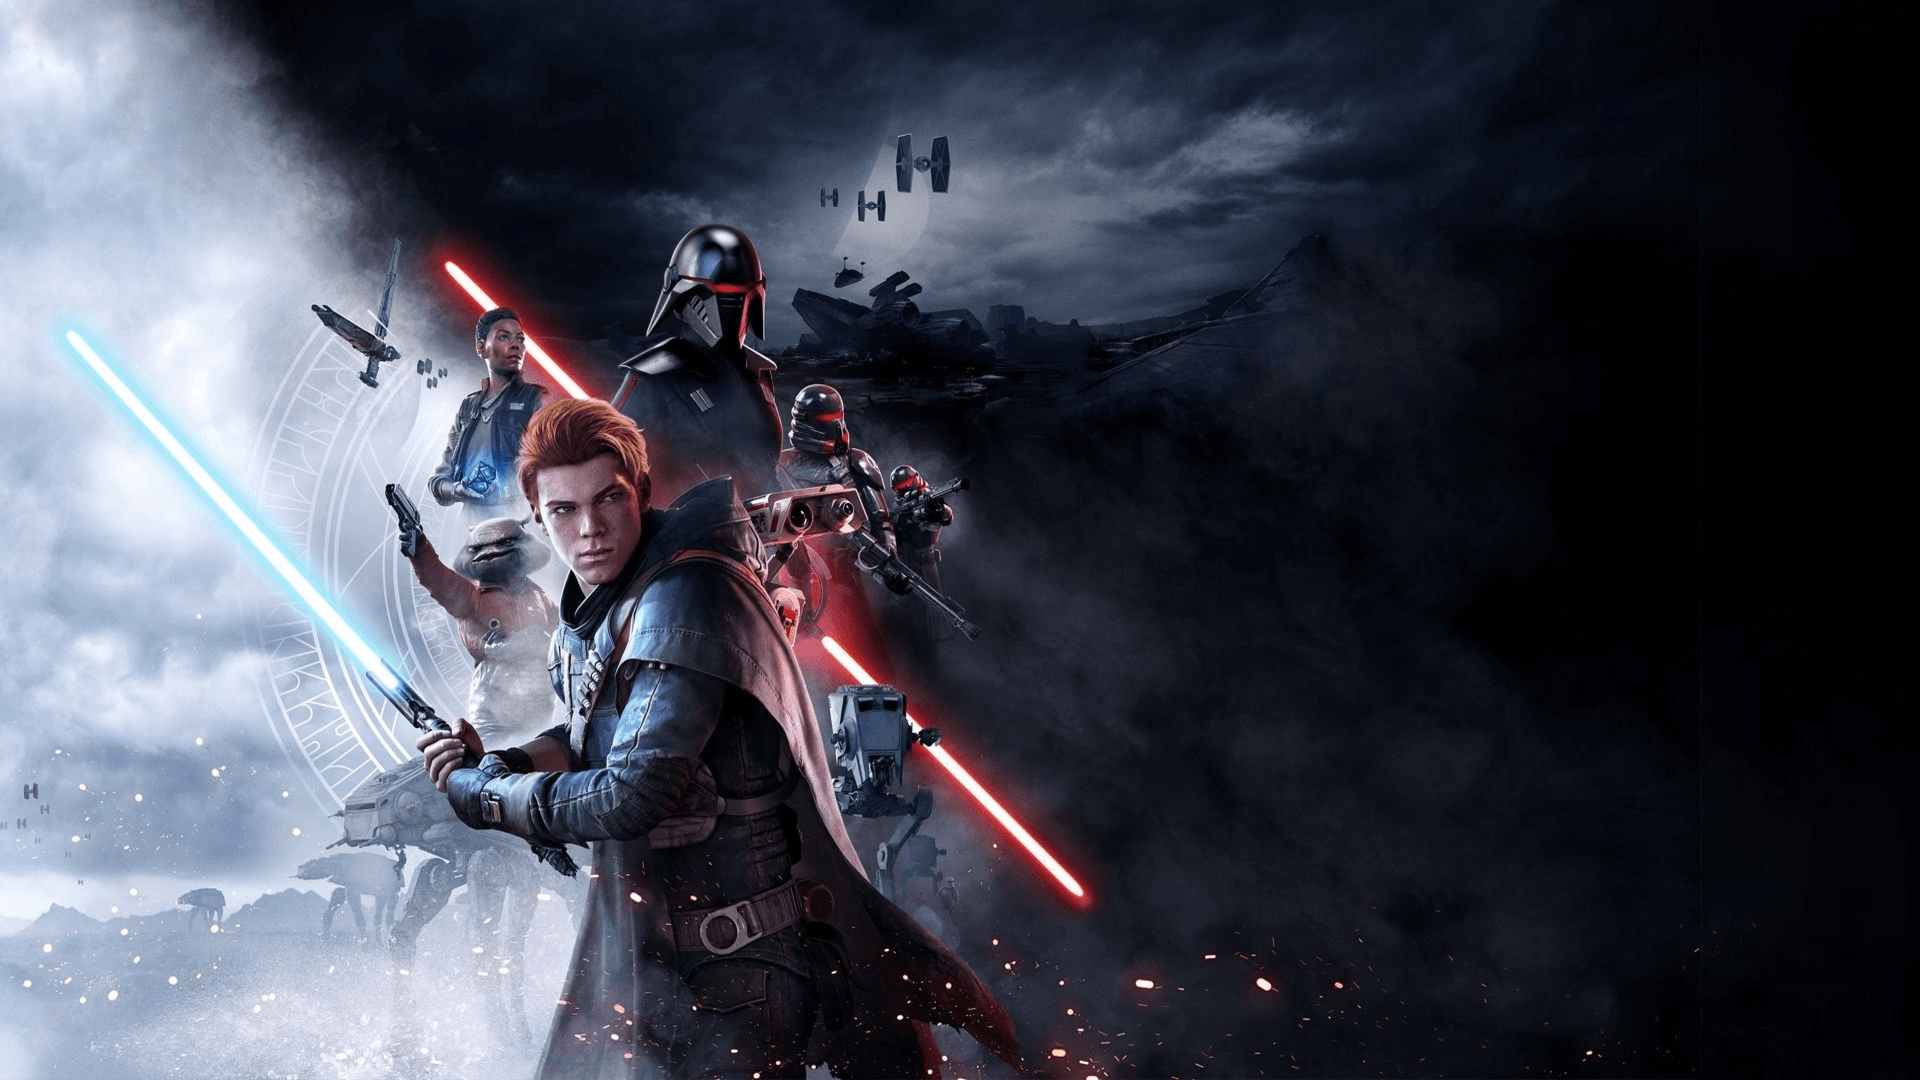 Star Wars Jedi: Fallen Order HD Wallpaper and Background Image